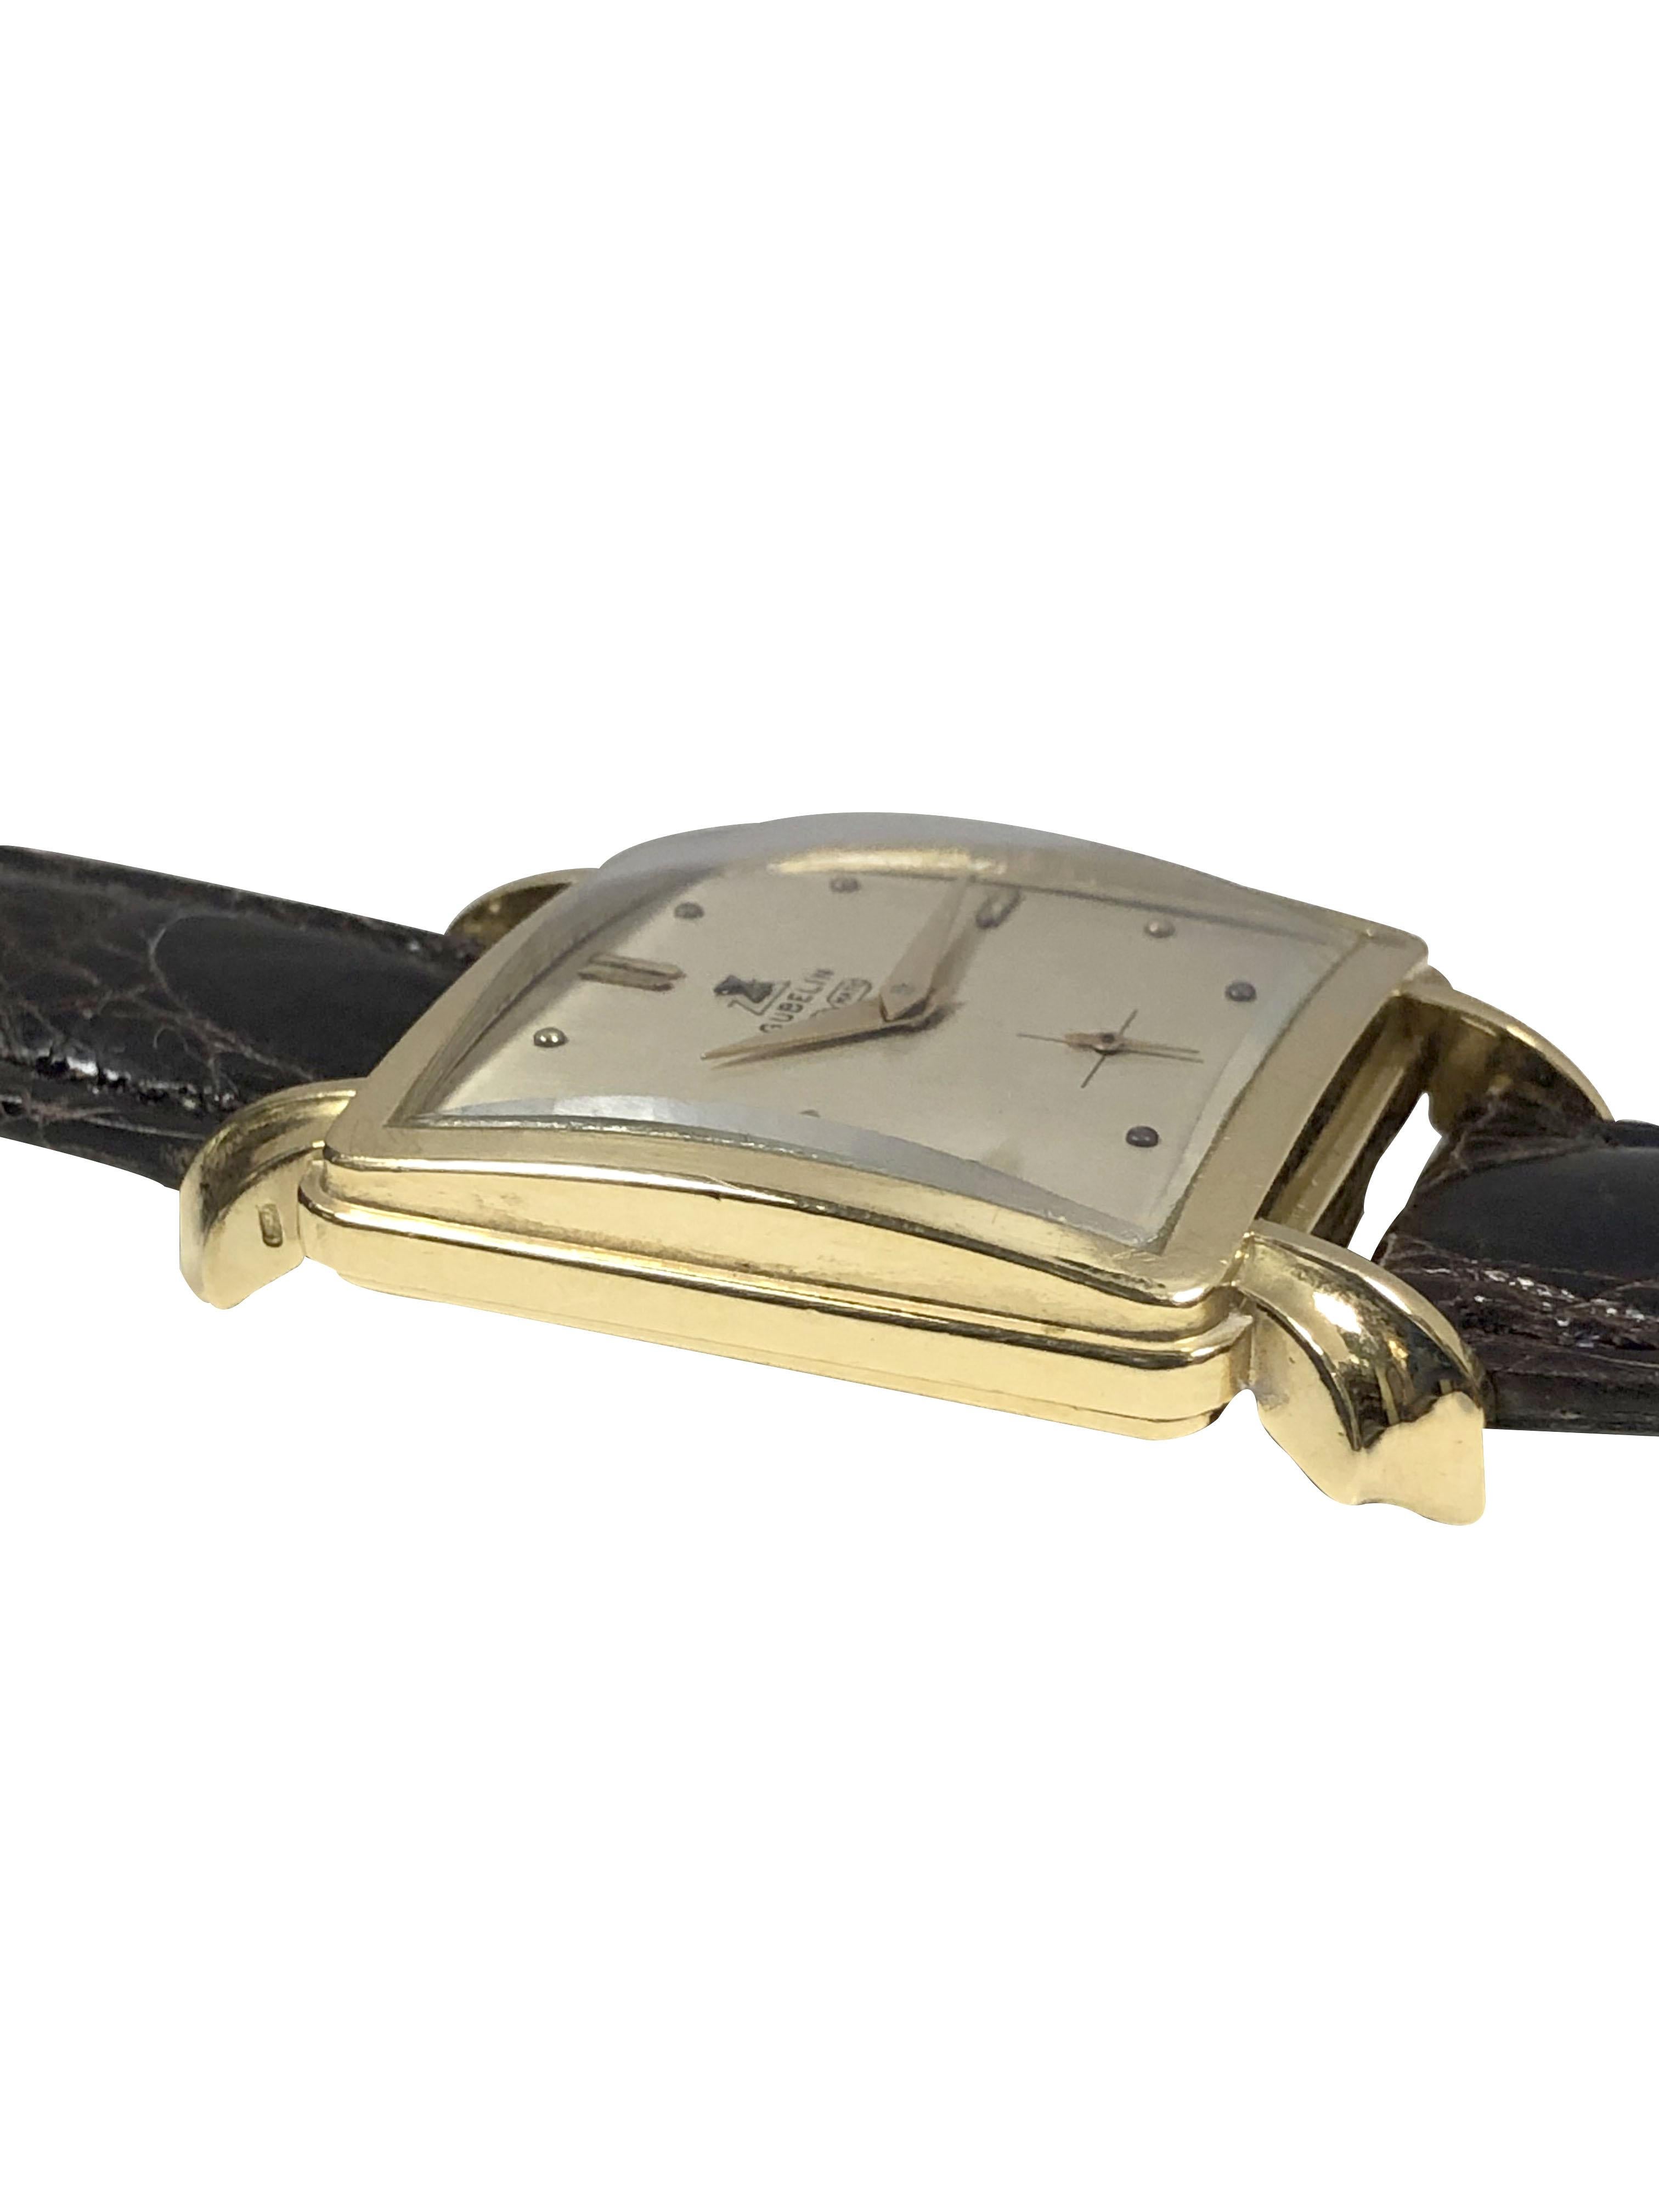 gubelin watch vintage